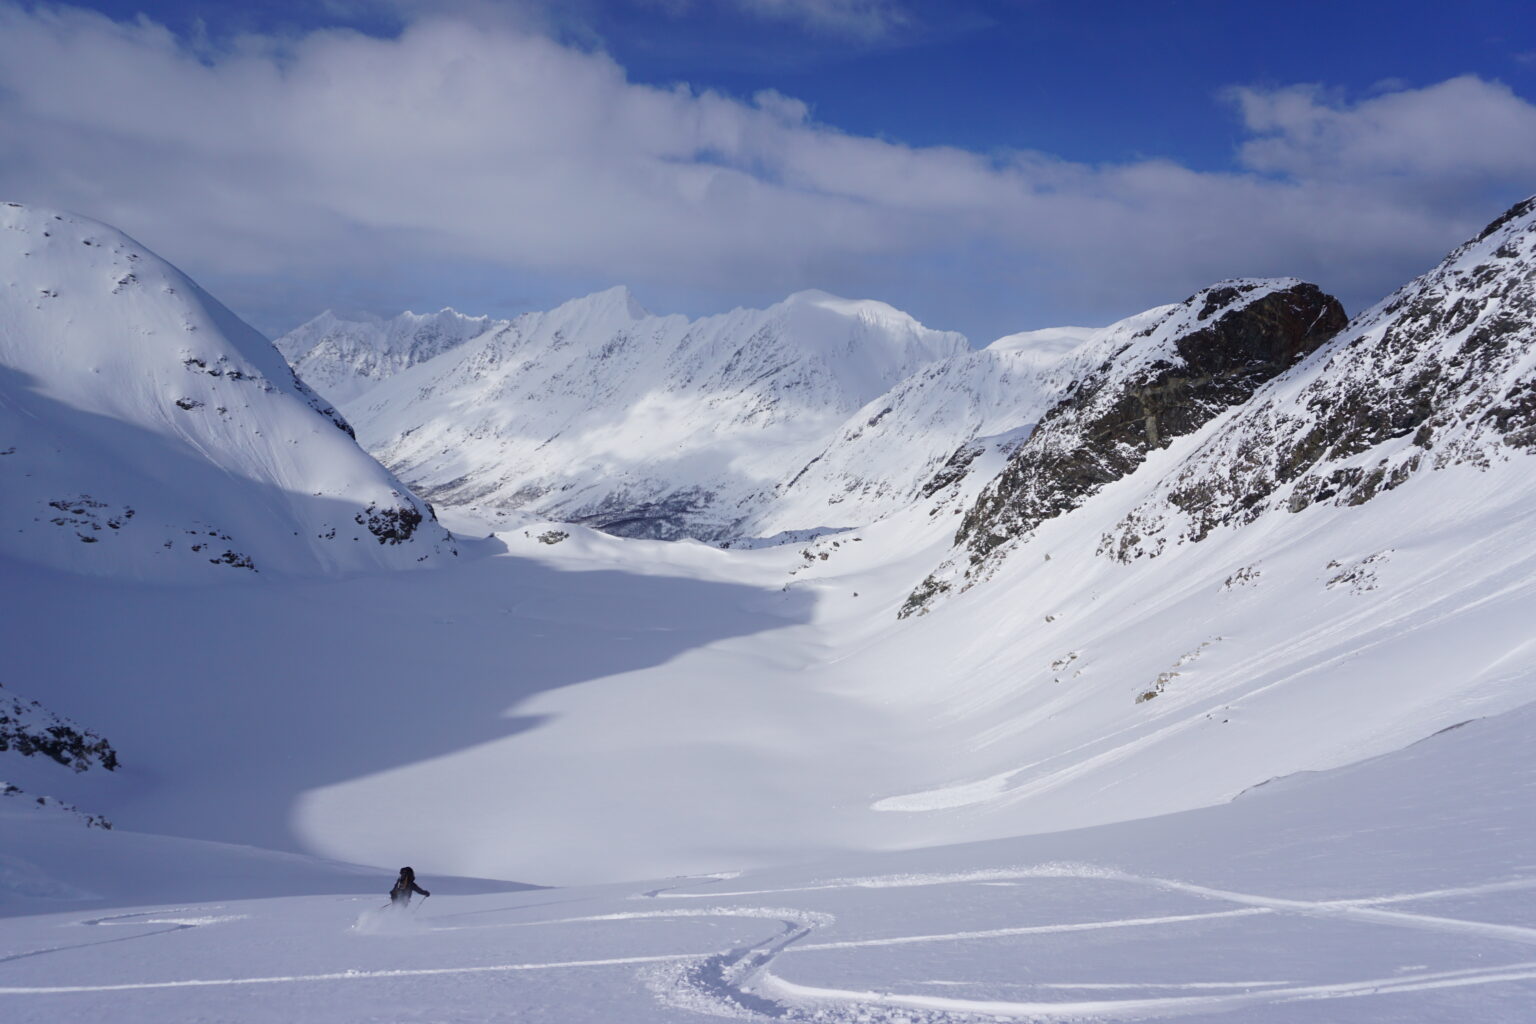 Illka making ski turns down the glacier